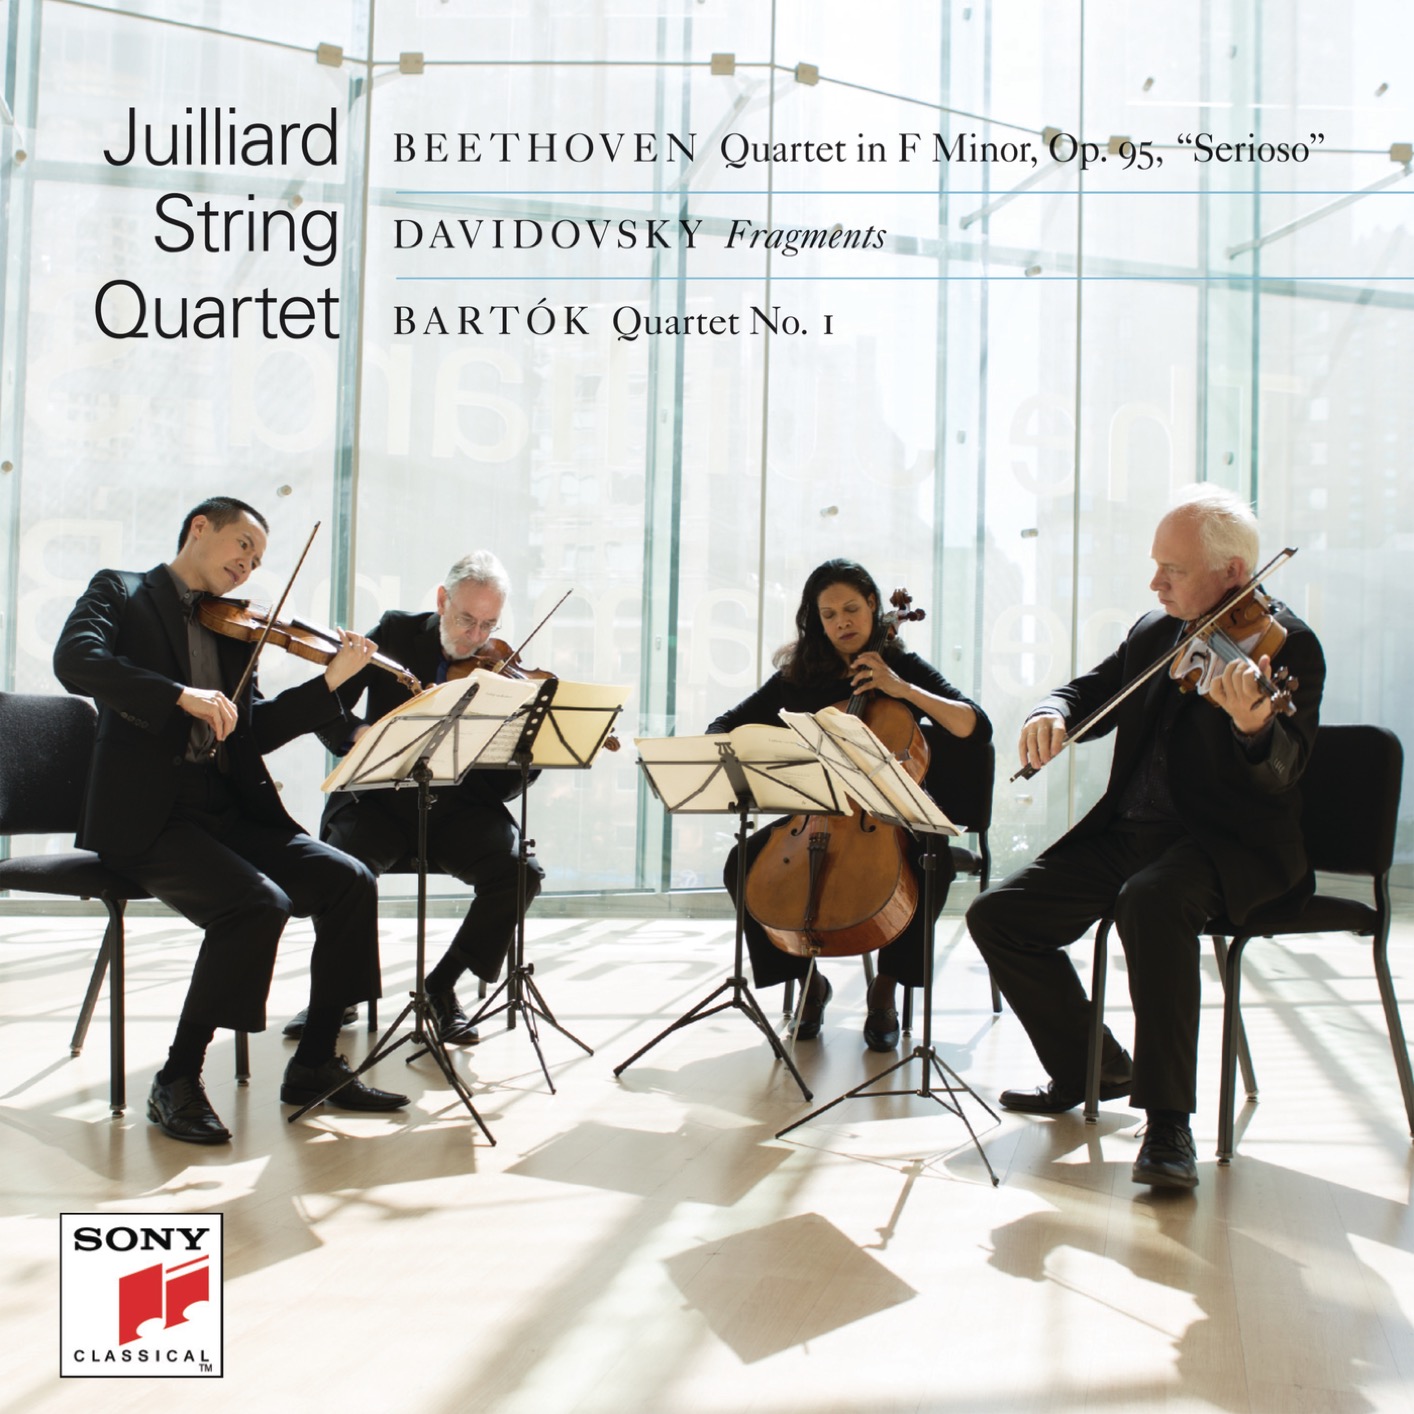 Juilliard String Quartet - Beethoven - Davidovsky - Bartok (2018) [FLAC 24bit/96kHz]